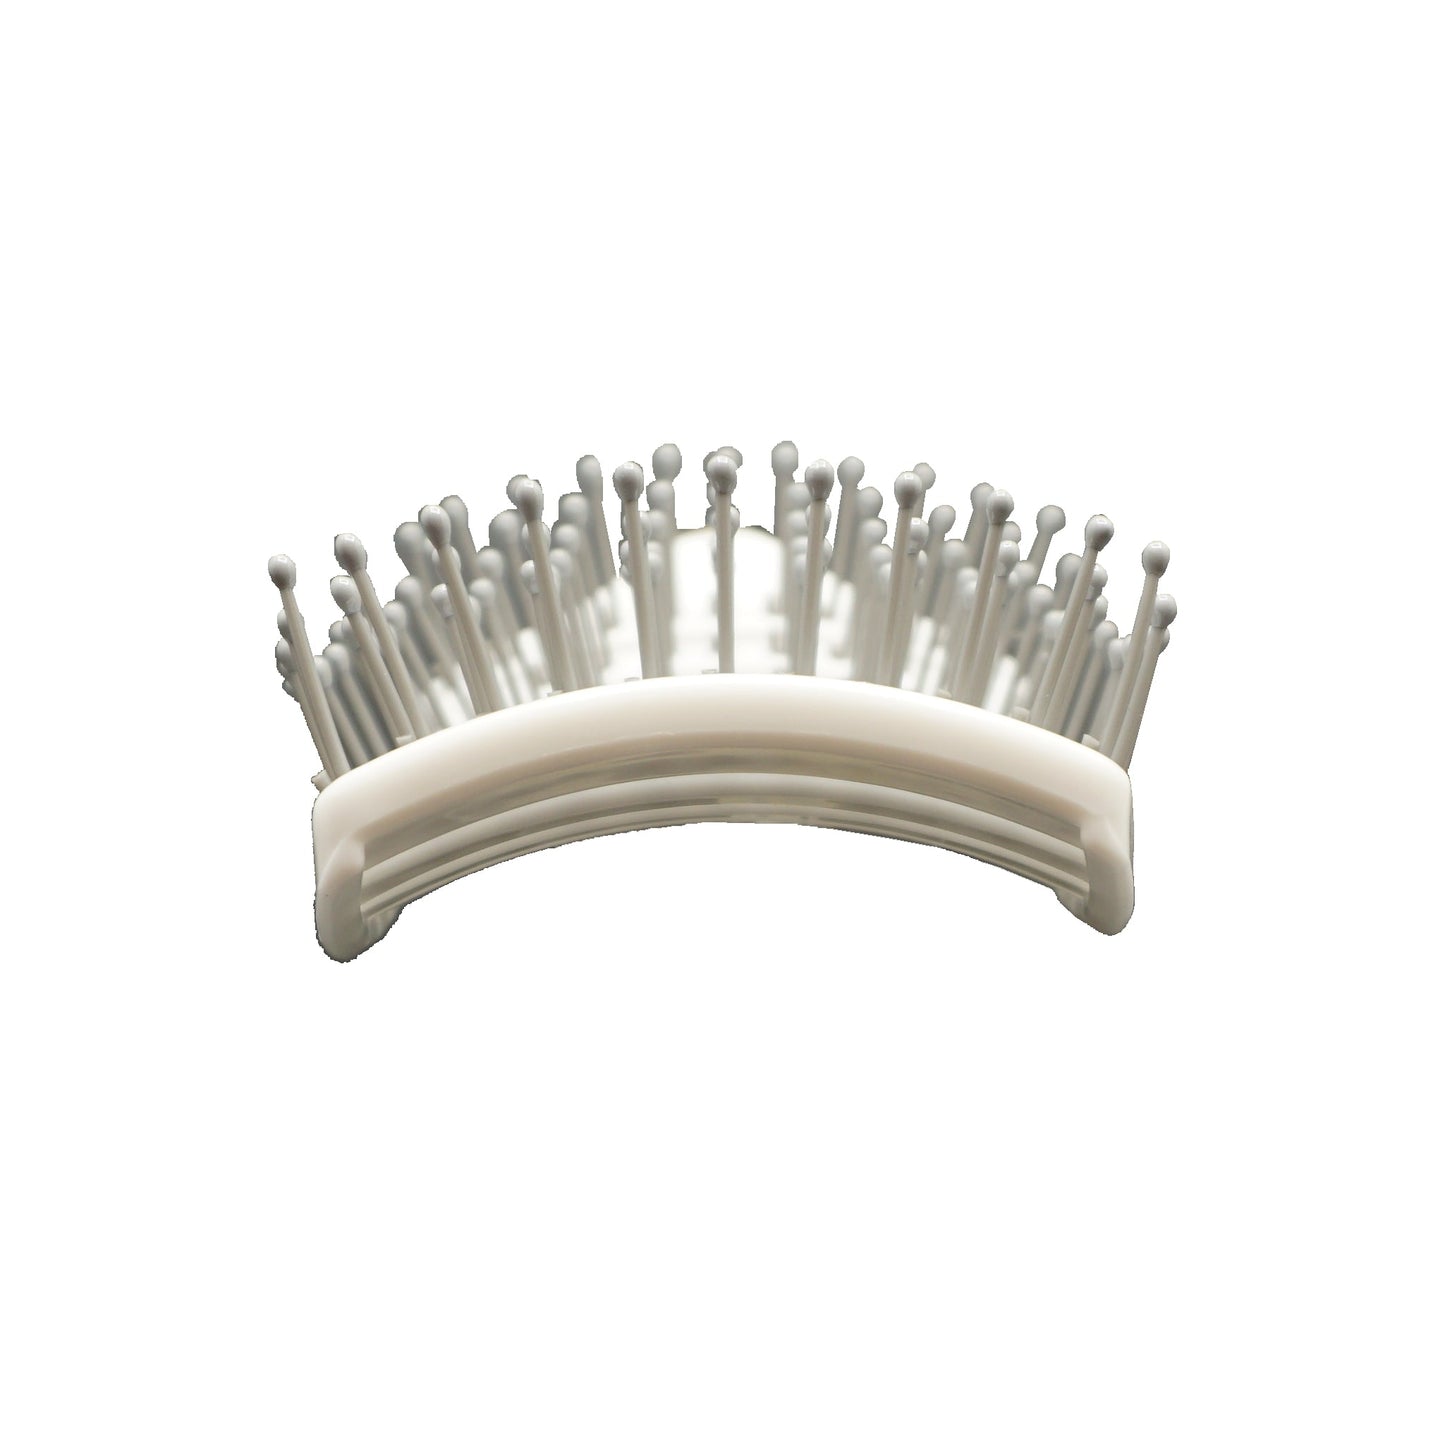 9.5in Vented Brush - Nylon Bristles, White - 12 Retail Packs